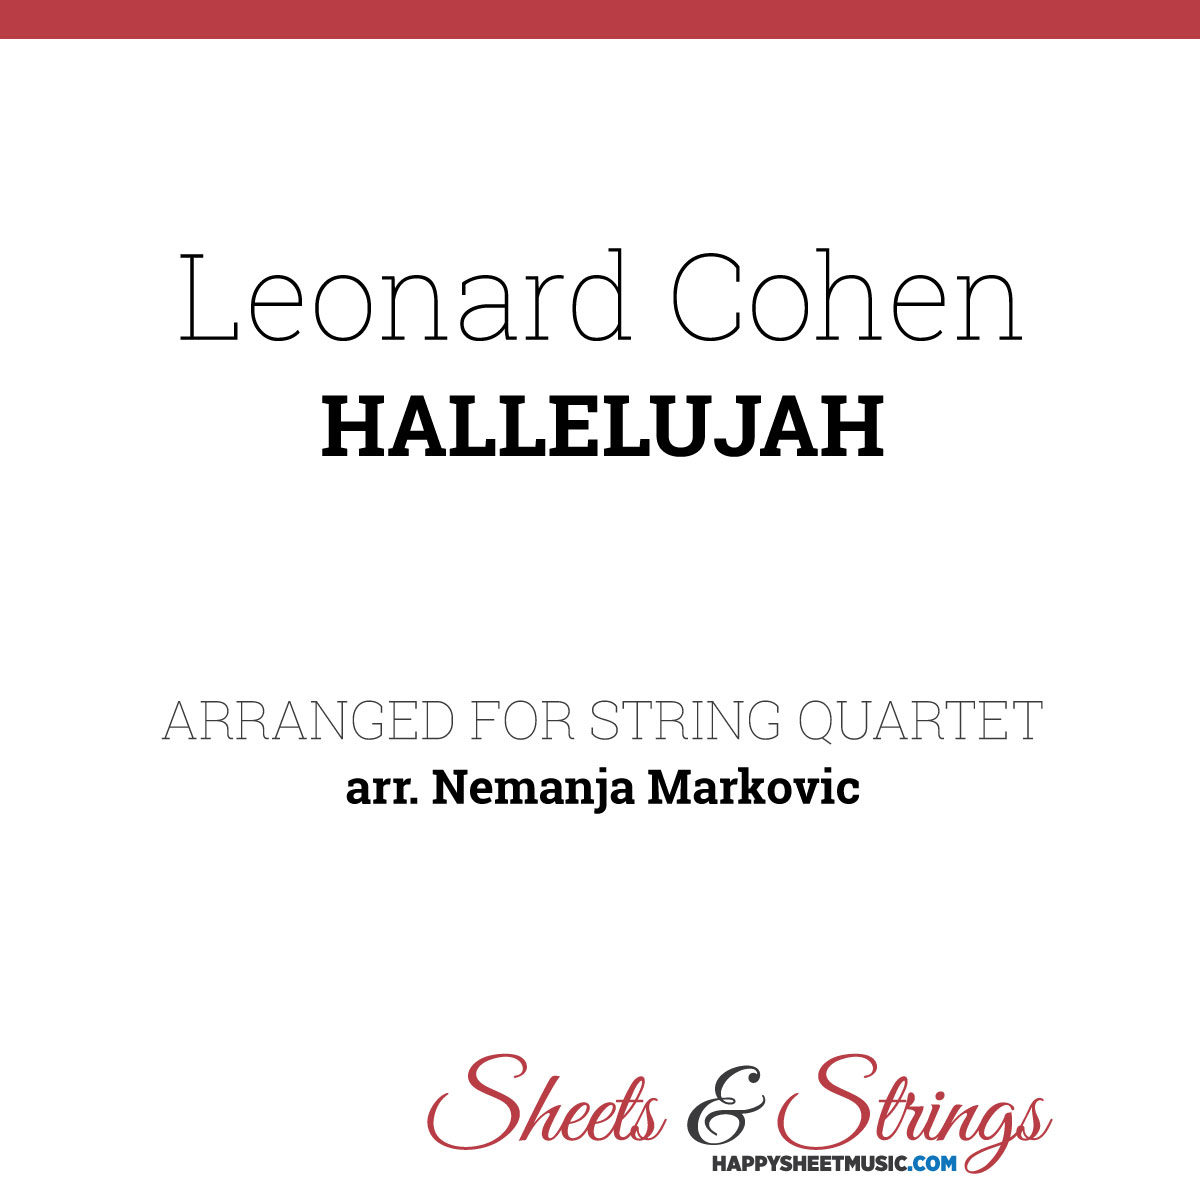 Leonard Cohen - Hallelujah Sheet Music for String Quartet - Music Arrangement for String Quartet